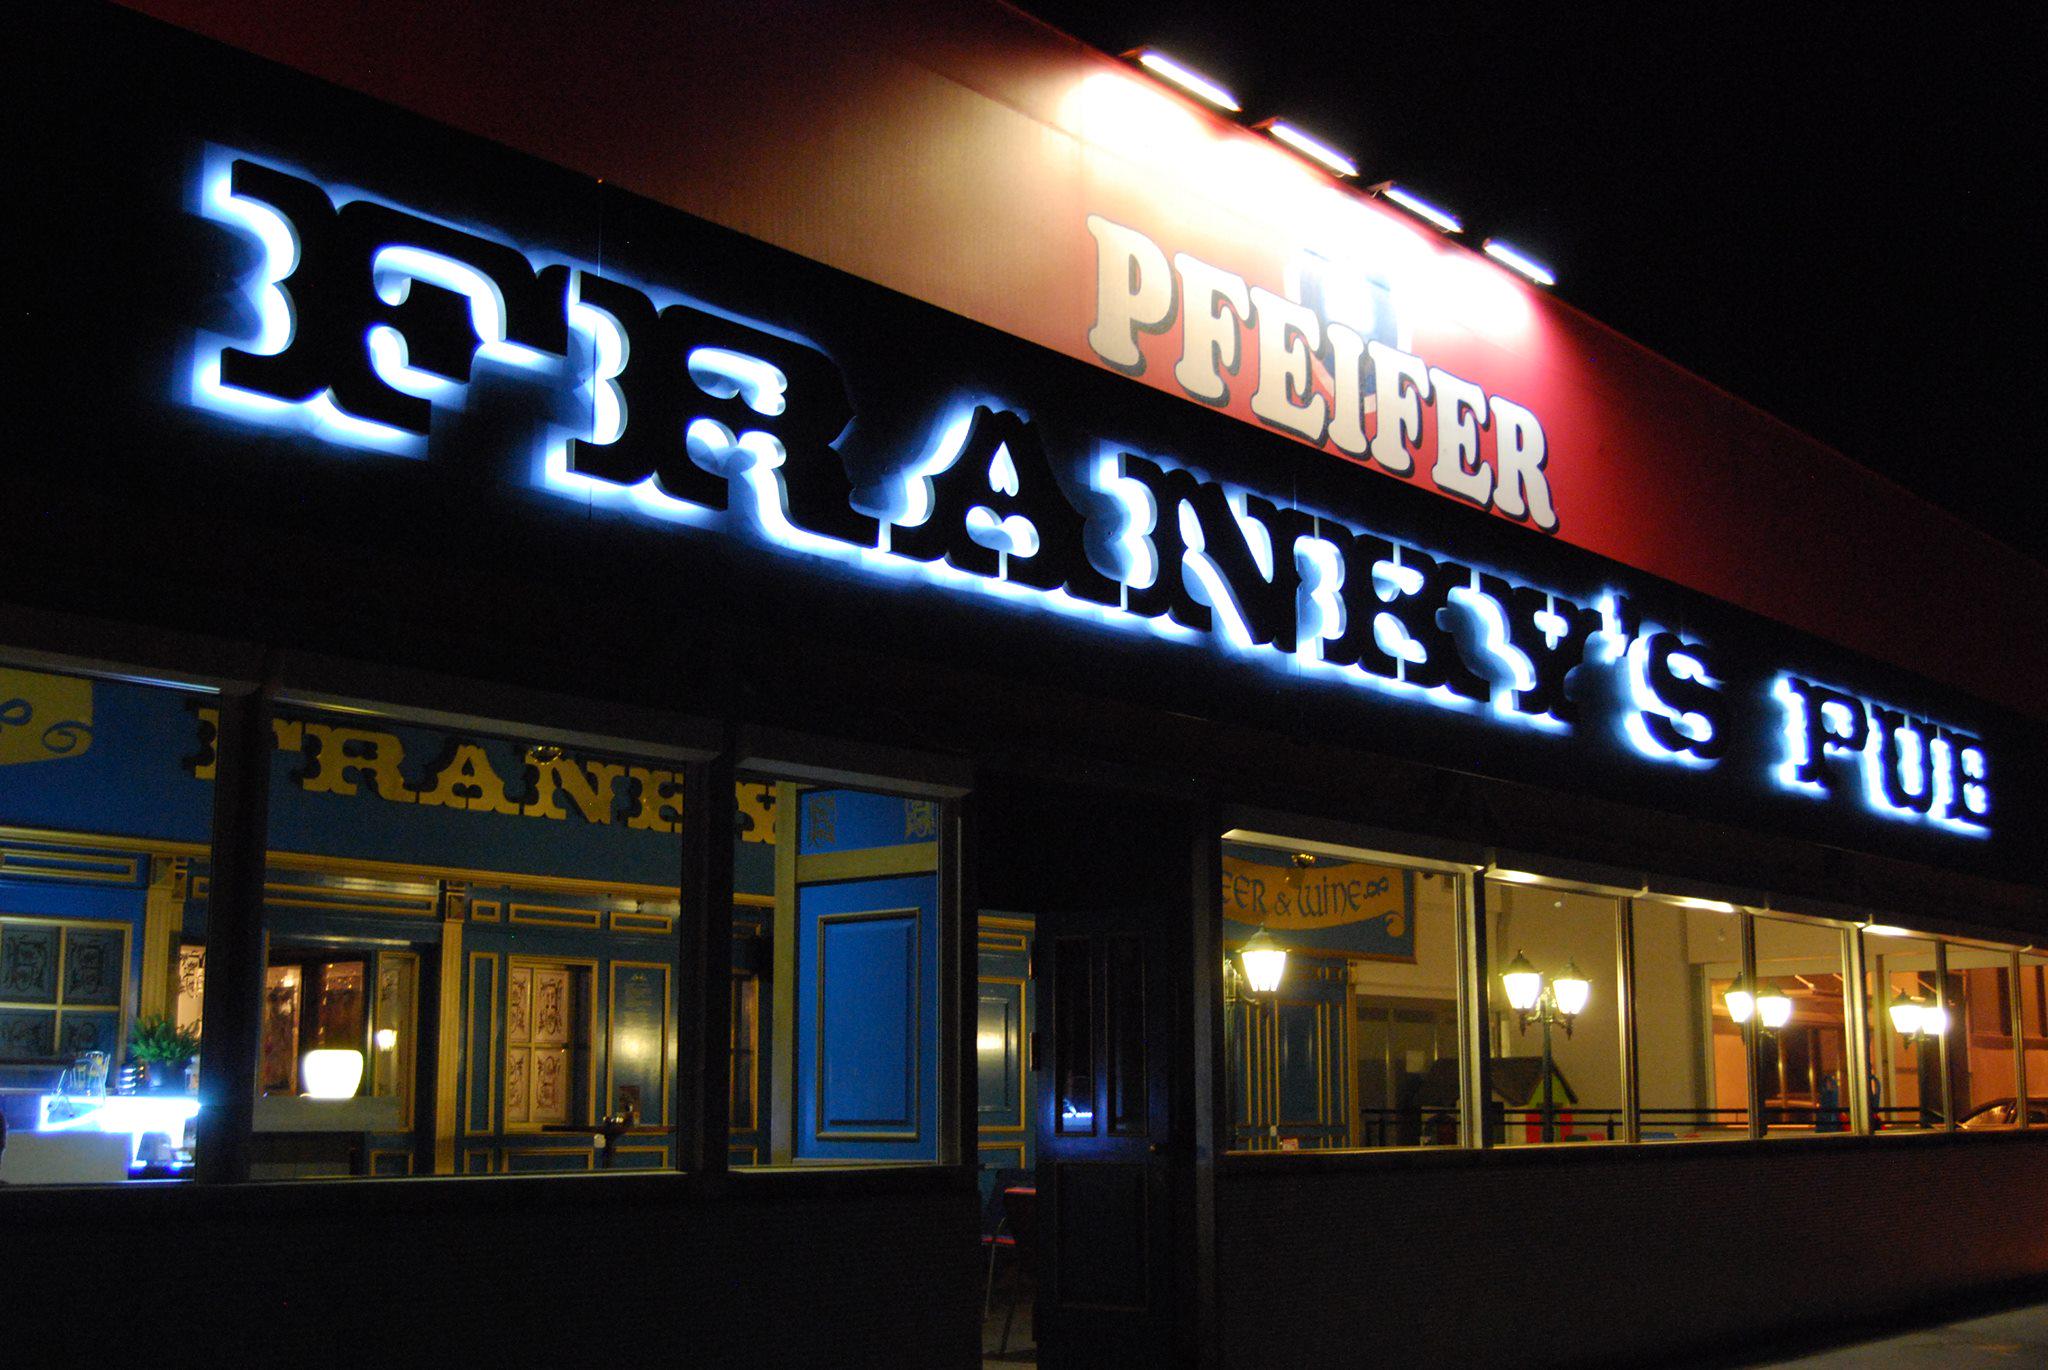 Franky's pub